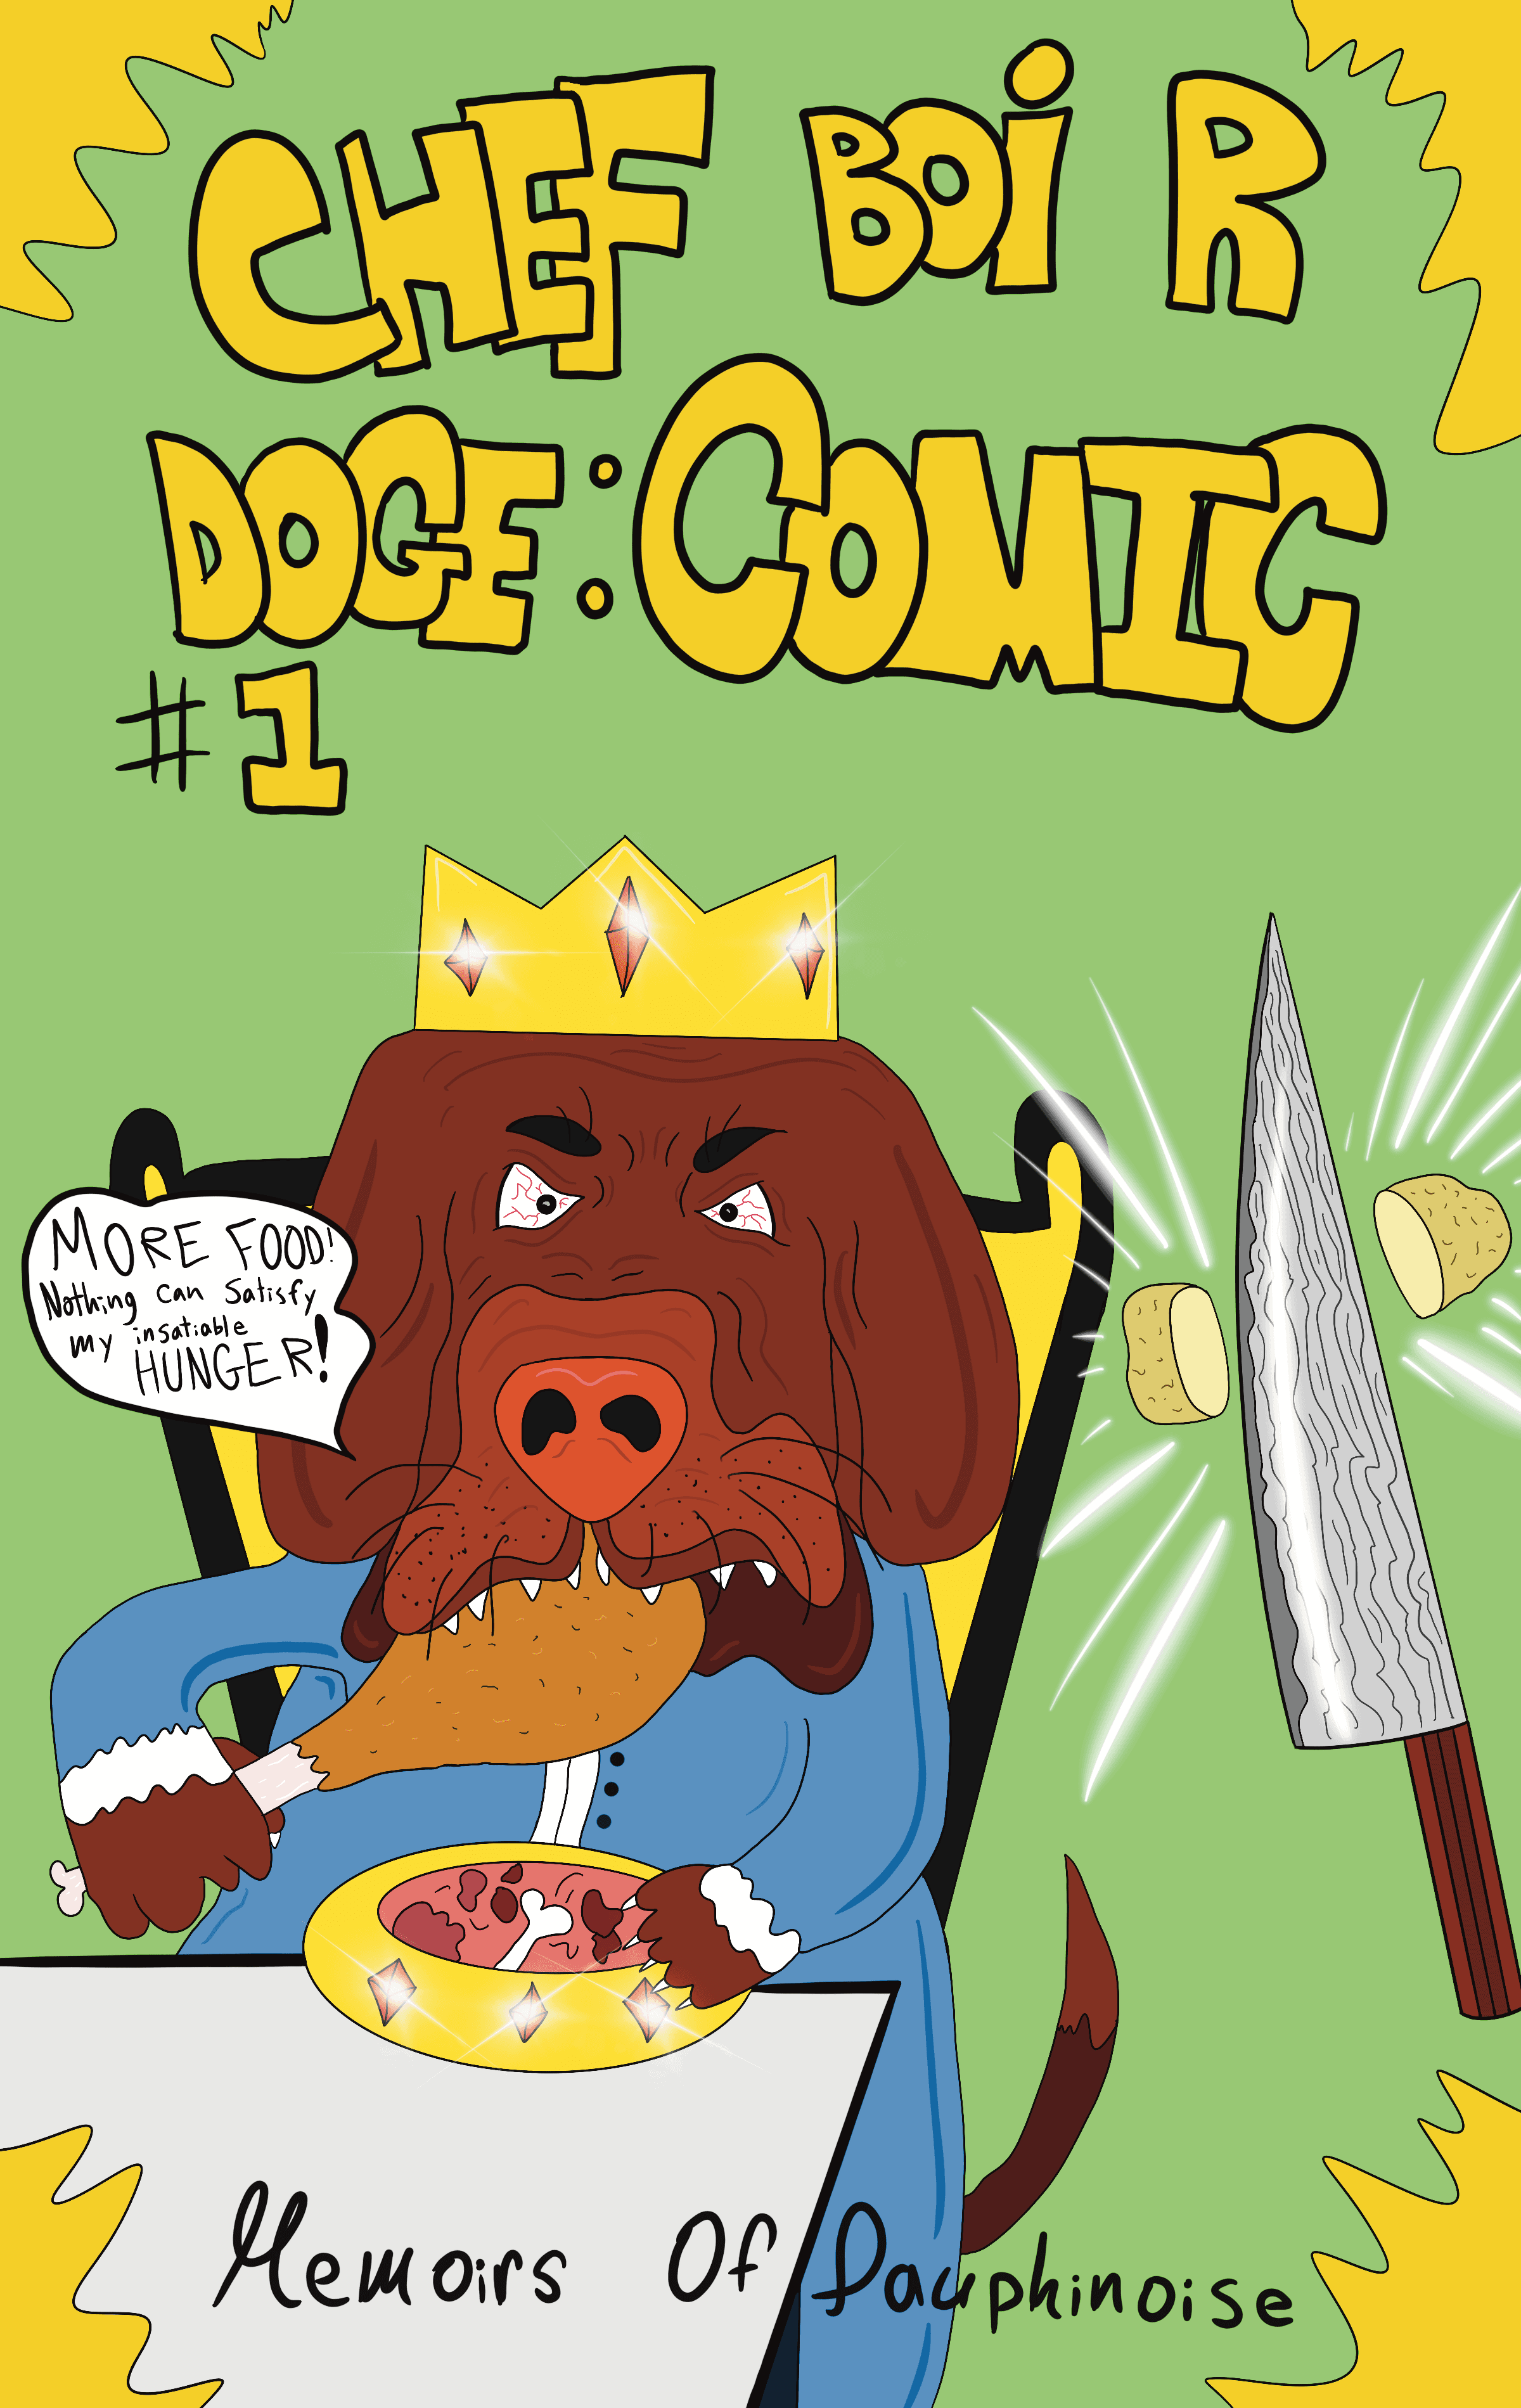 Chef Boi R Doge: Comic #1: Memoirs of dauphinoise